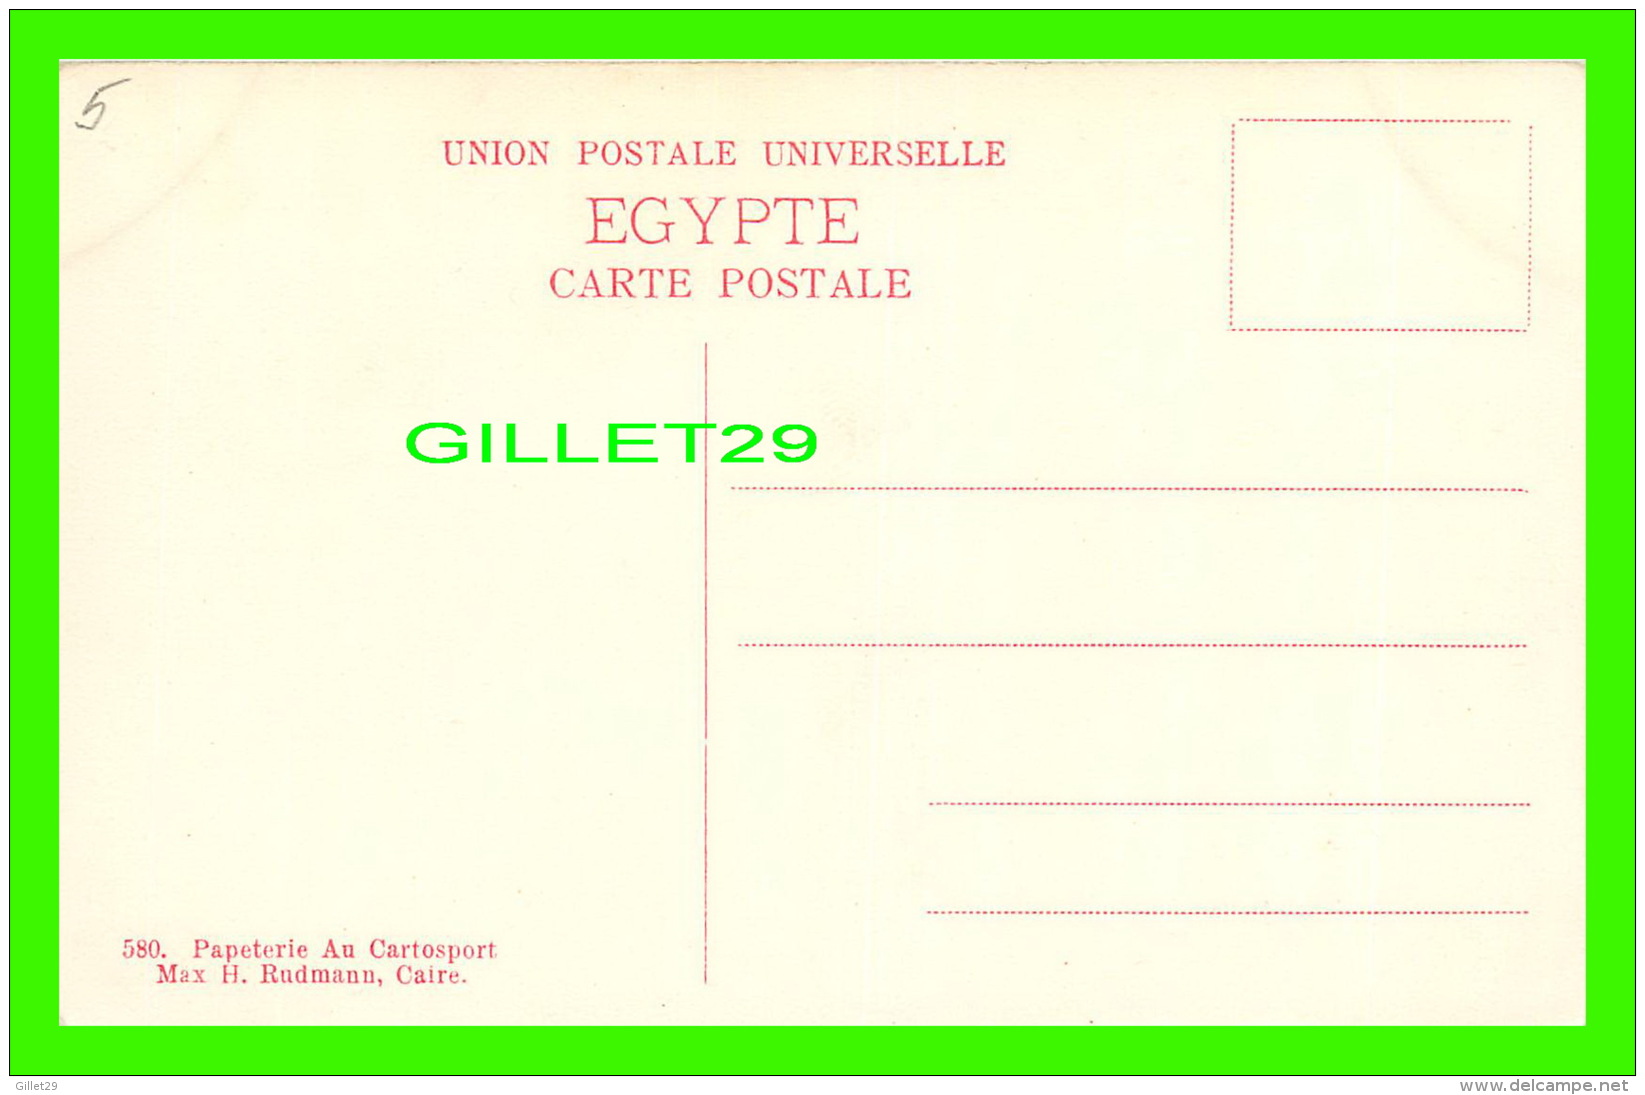 CAIRO, EGYPTE - THE THREE PYRAMIDS - 3/4 BACK - PAPETERIE AU CARTOSPORT - - Le Caire